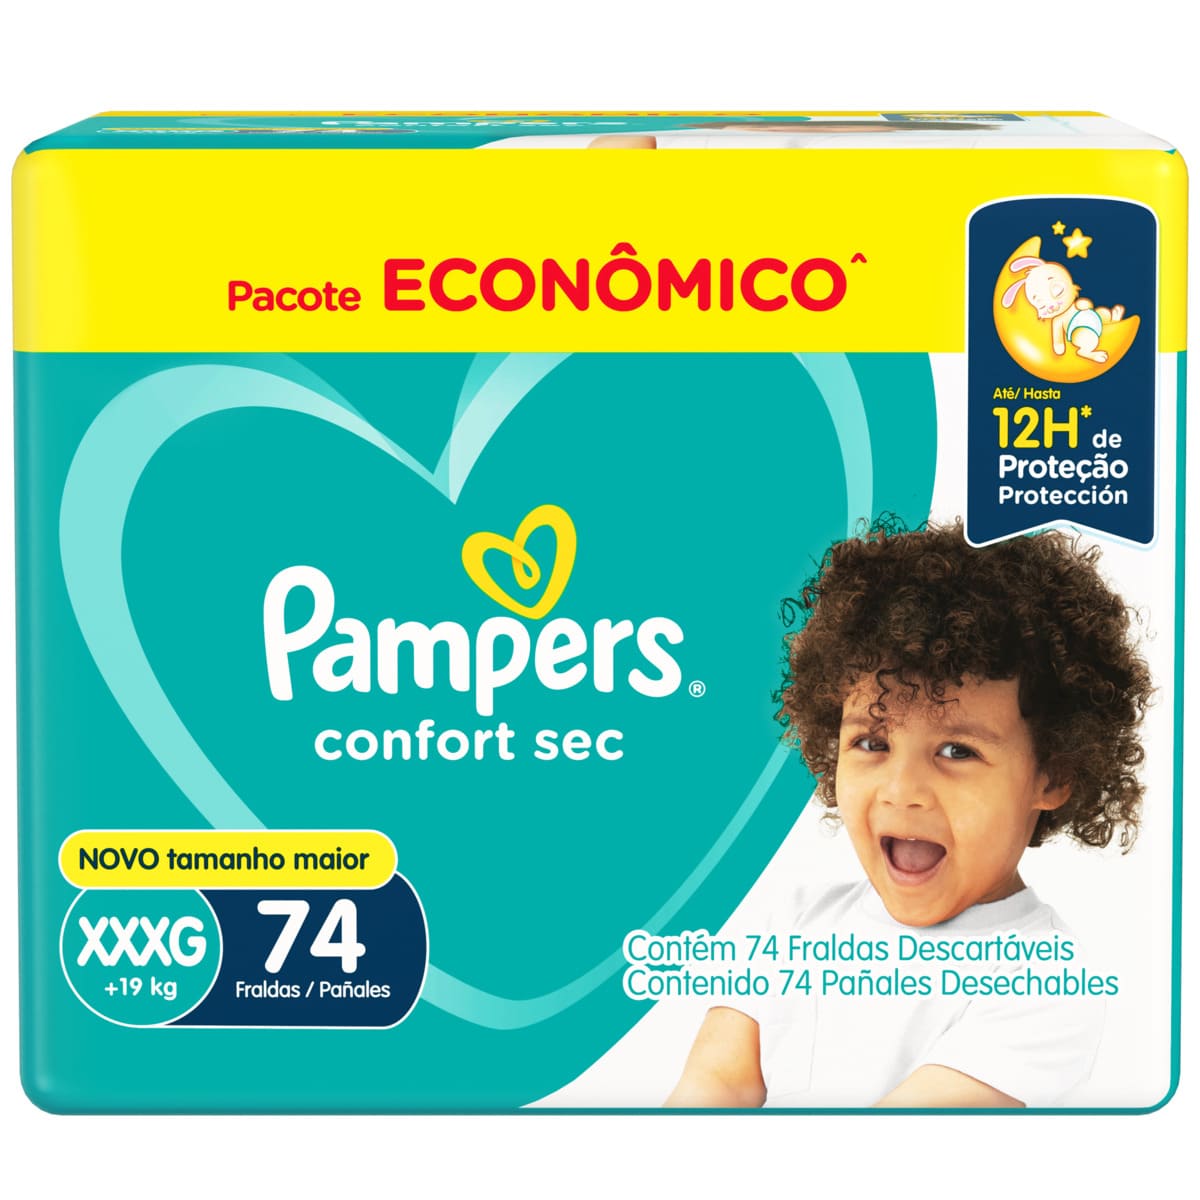 Foto da Fralda Descartável Infantil Pampers Confort Sec Xxxg + De 19kg Pacote 74 Unidades Embalagem Econômica